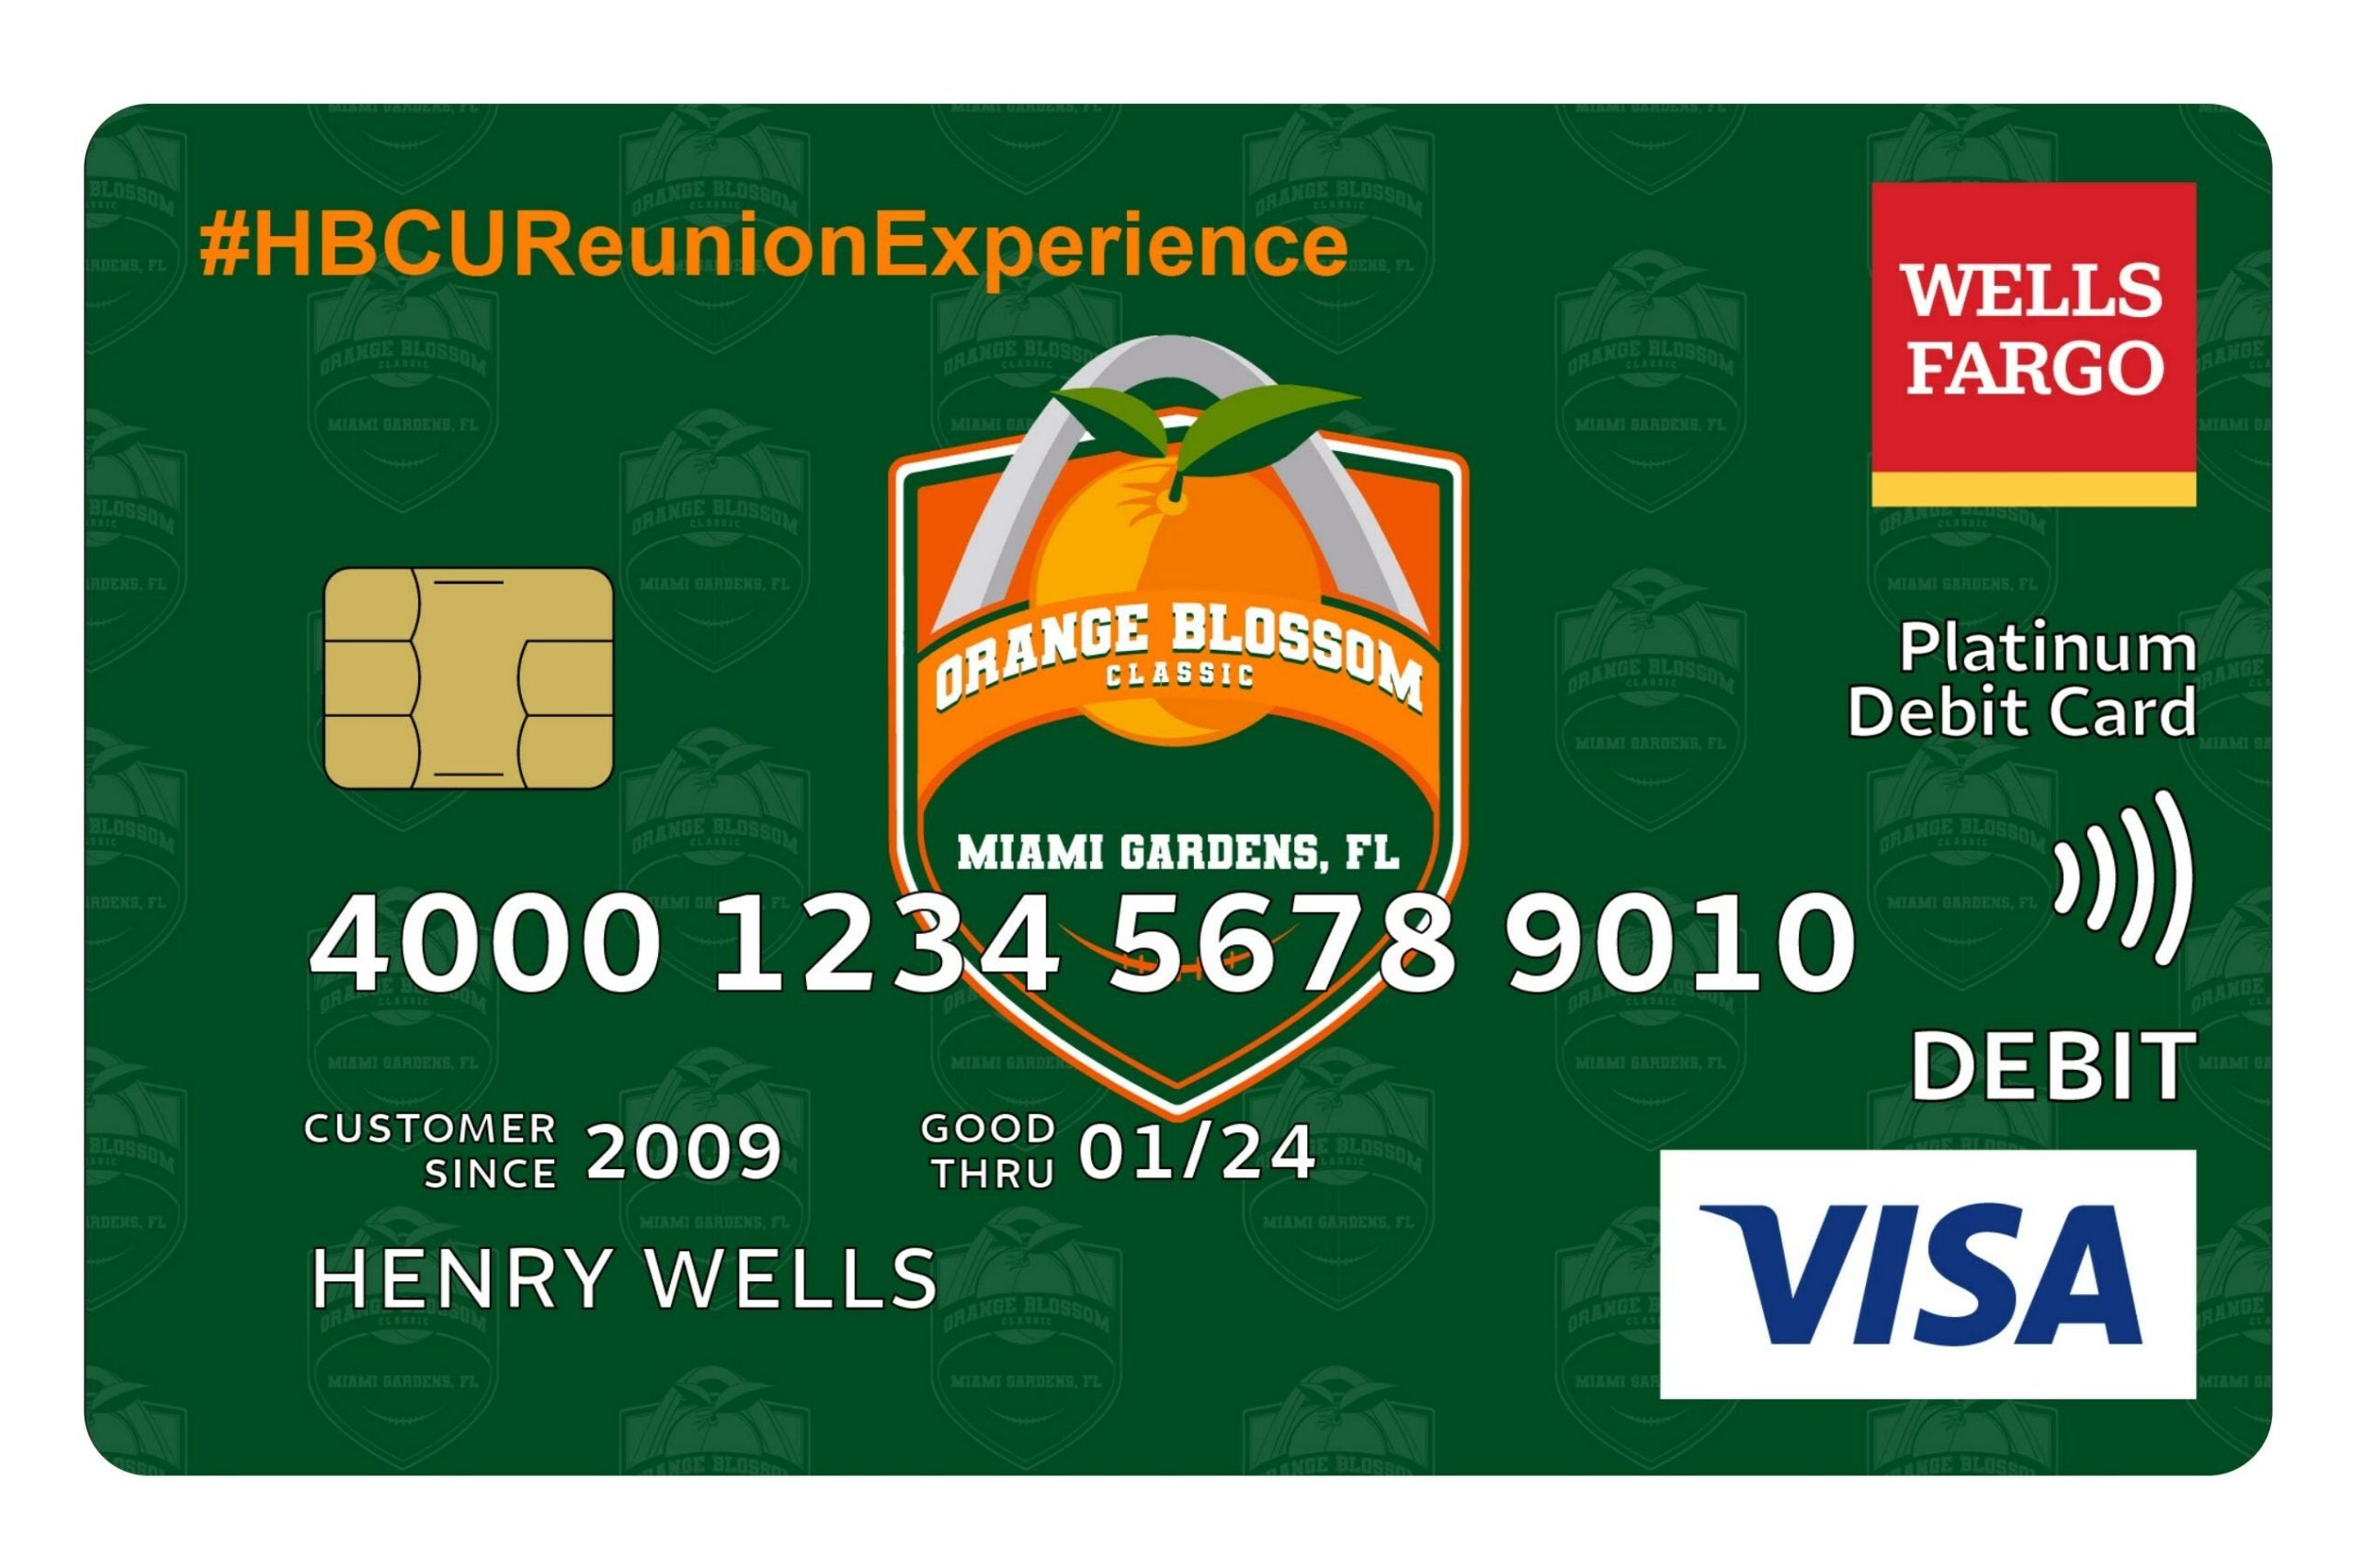 Wells Fargo Launches HBCU-Themed Debit Card